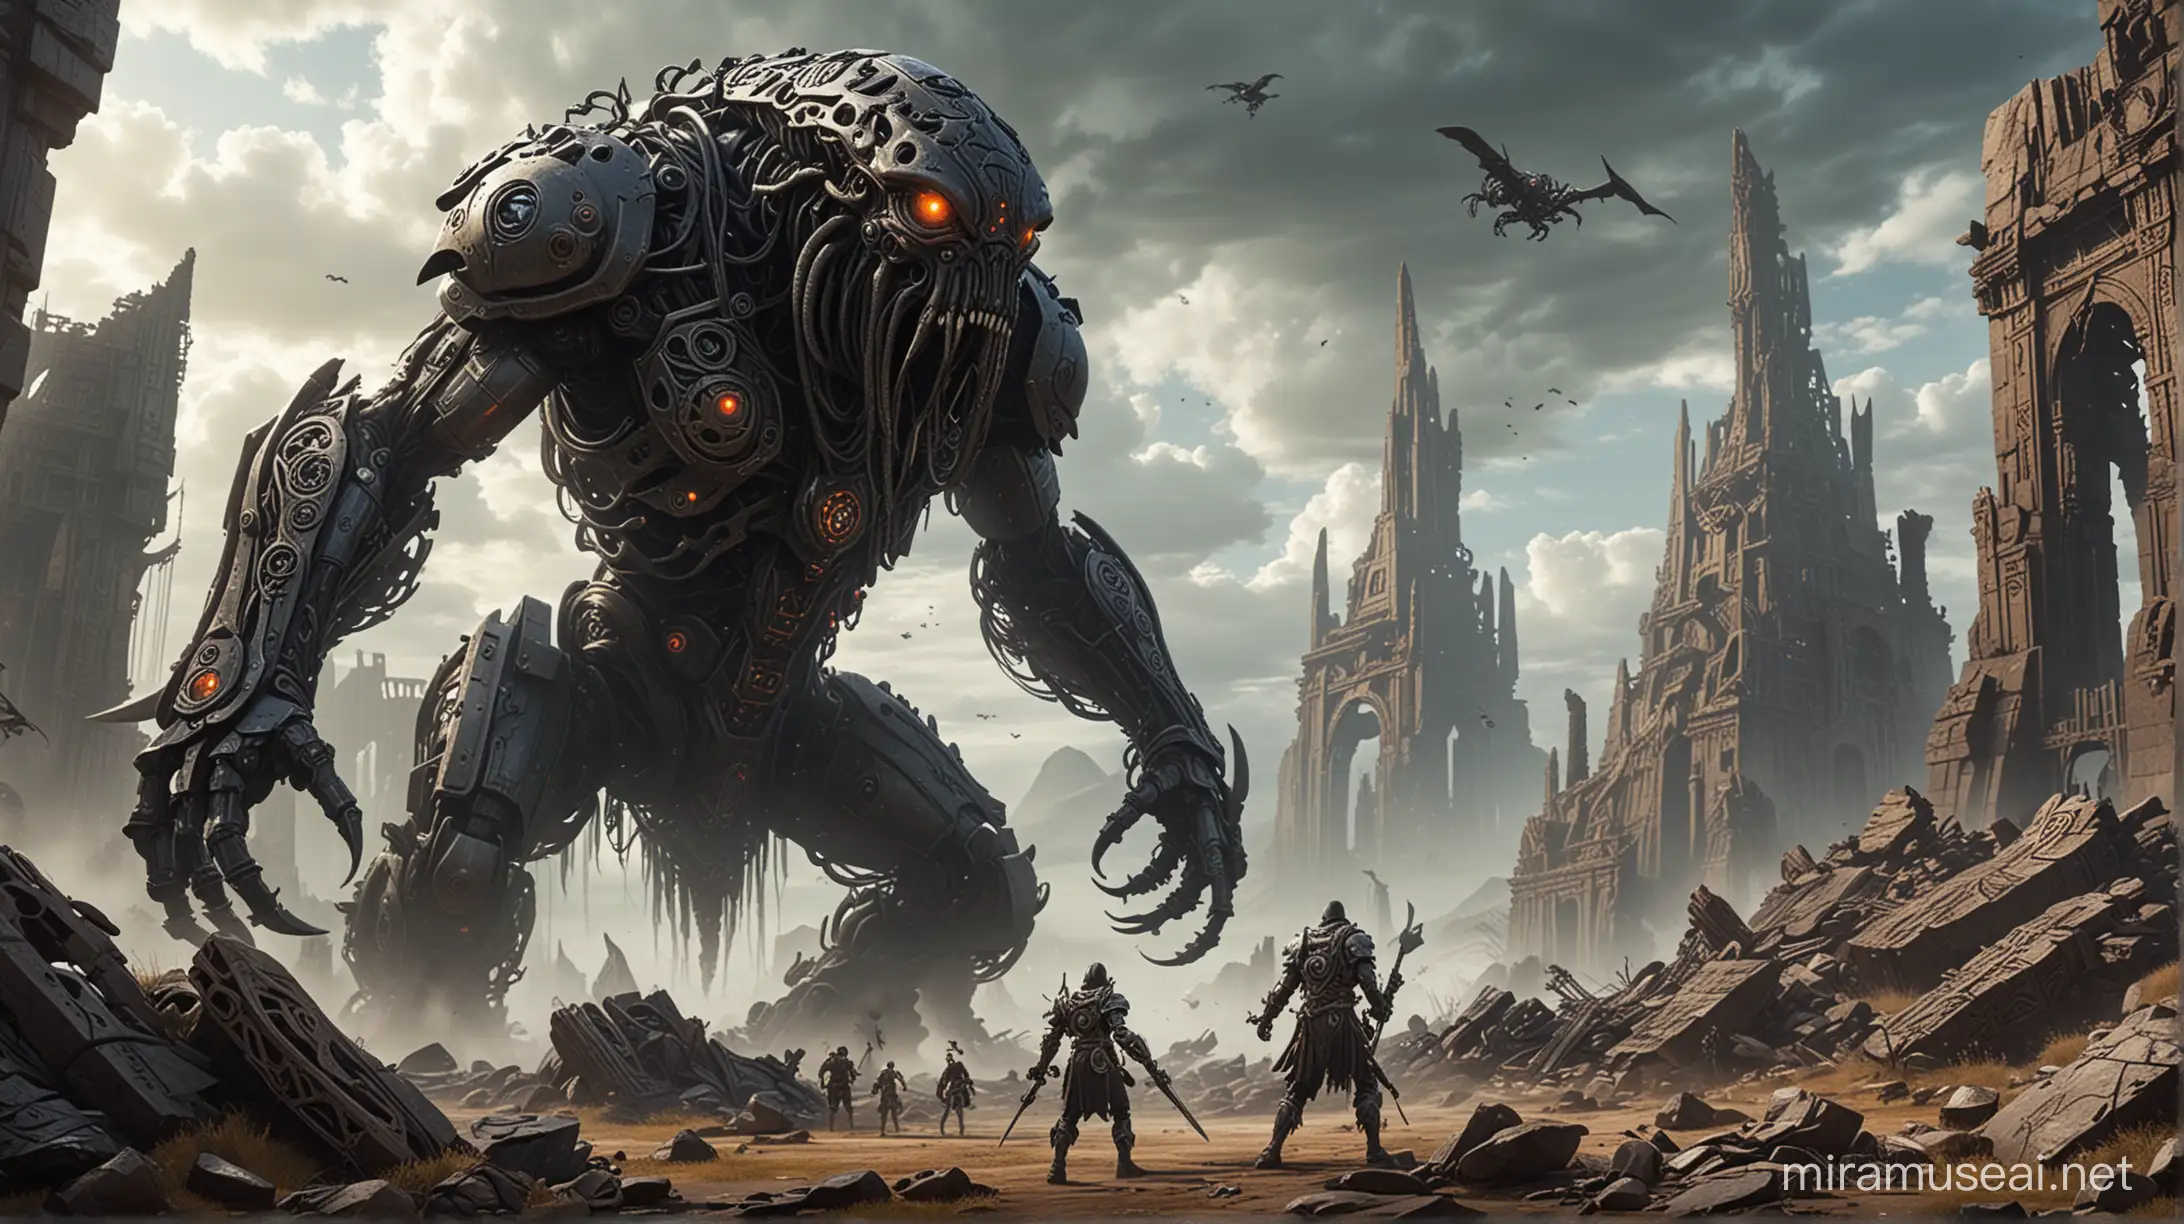 Epic Battle Lovecraftian Monster vs Alien Robot Amid Ancient Alien Ruins